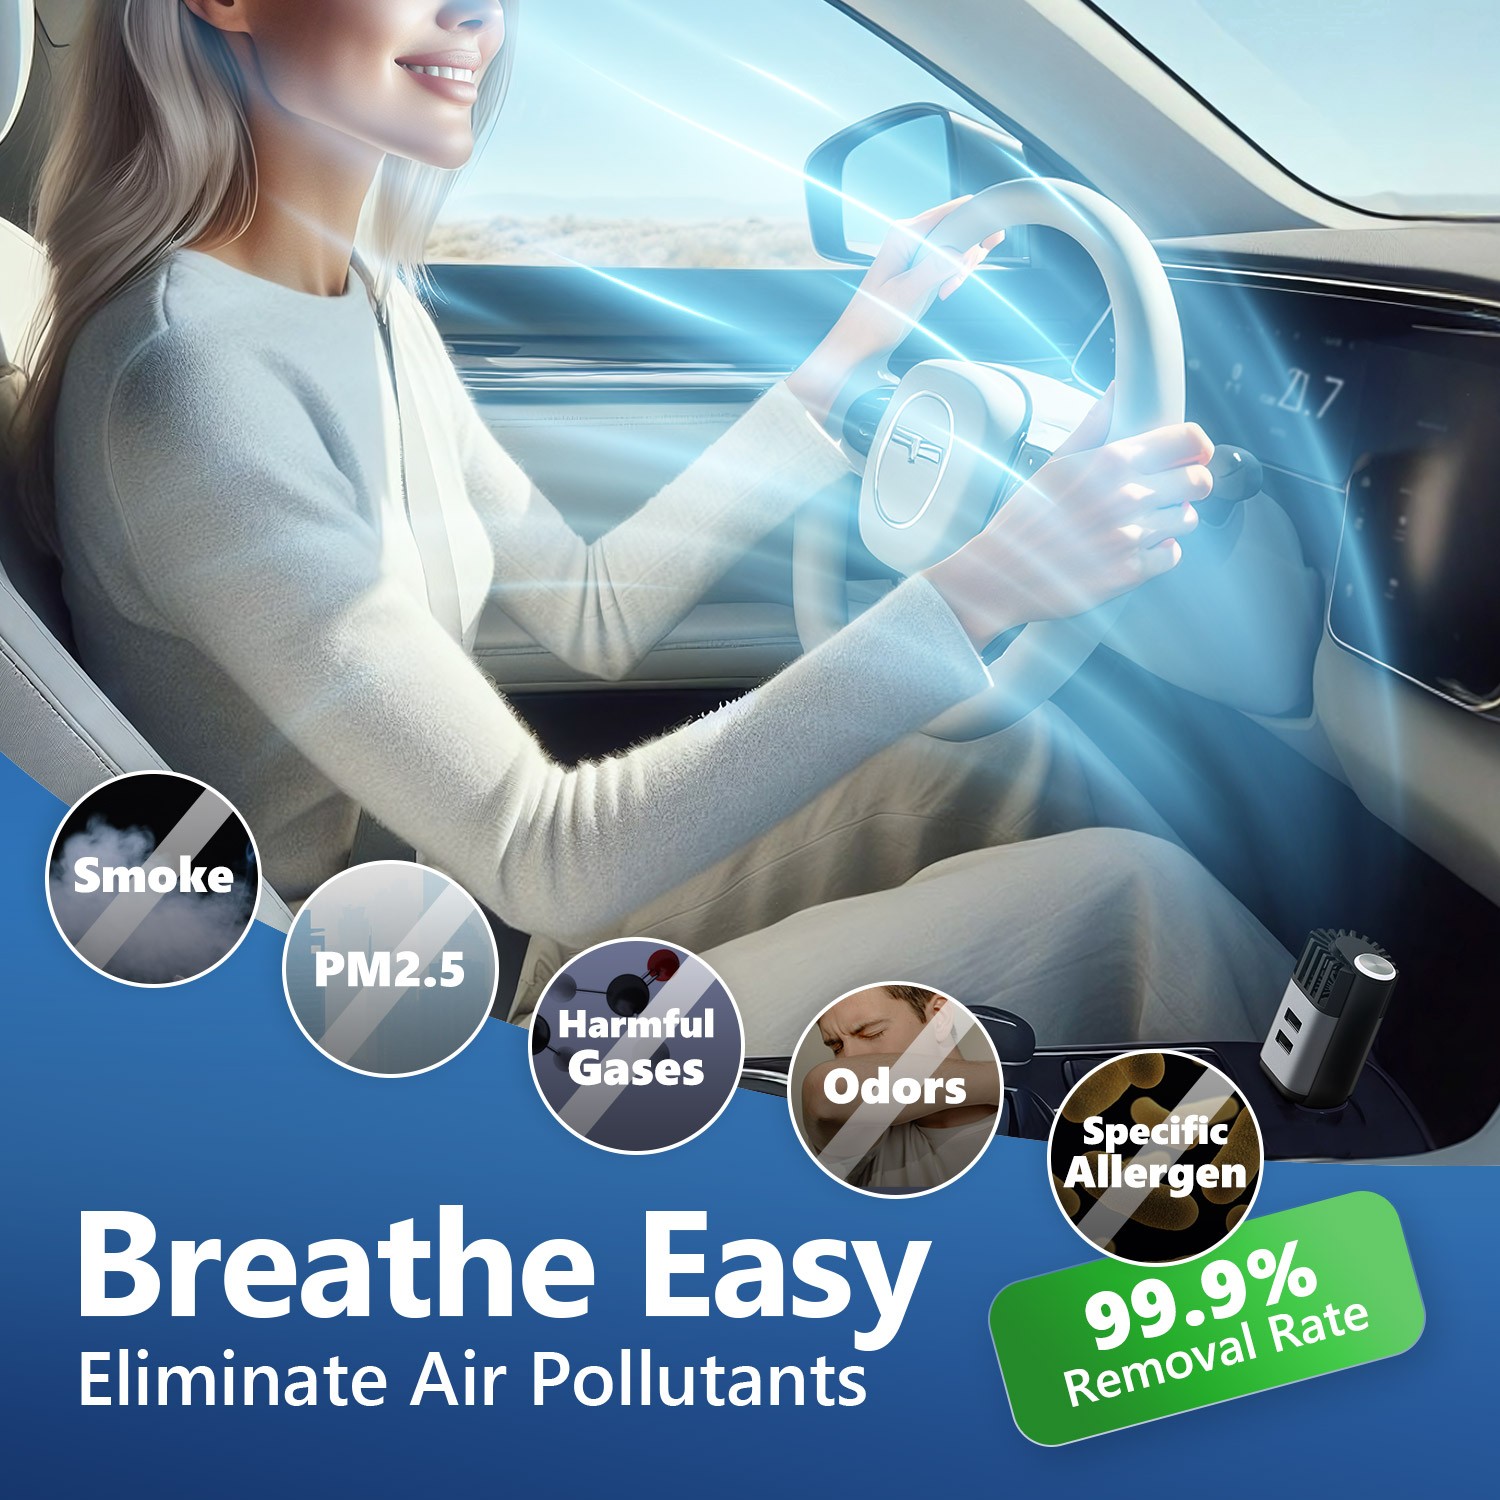 Car Charger Mini Car Air Purifier Kills Bacteria, Eliminate Smoke, PM2.5, Reduce Odor, Formaldehyde, Benzene, VOC